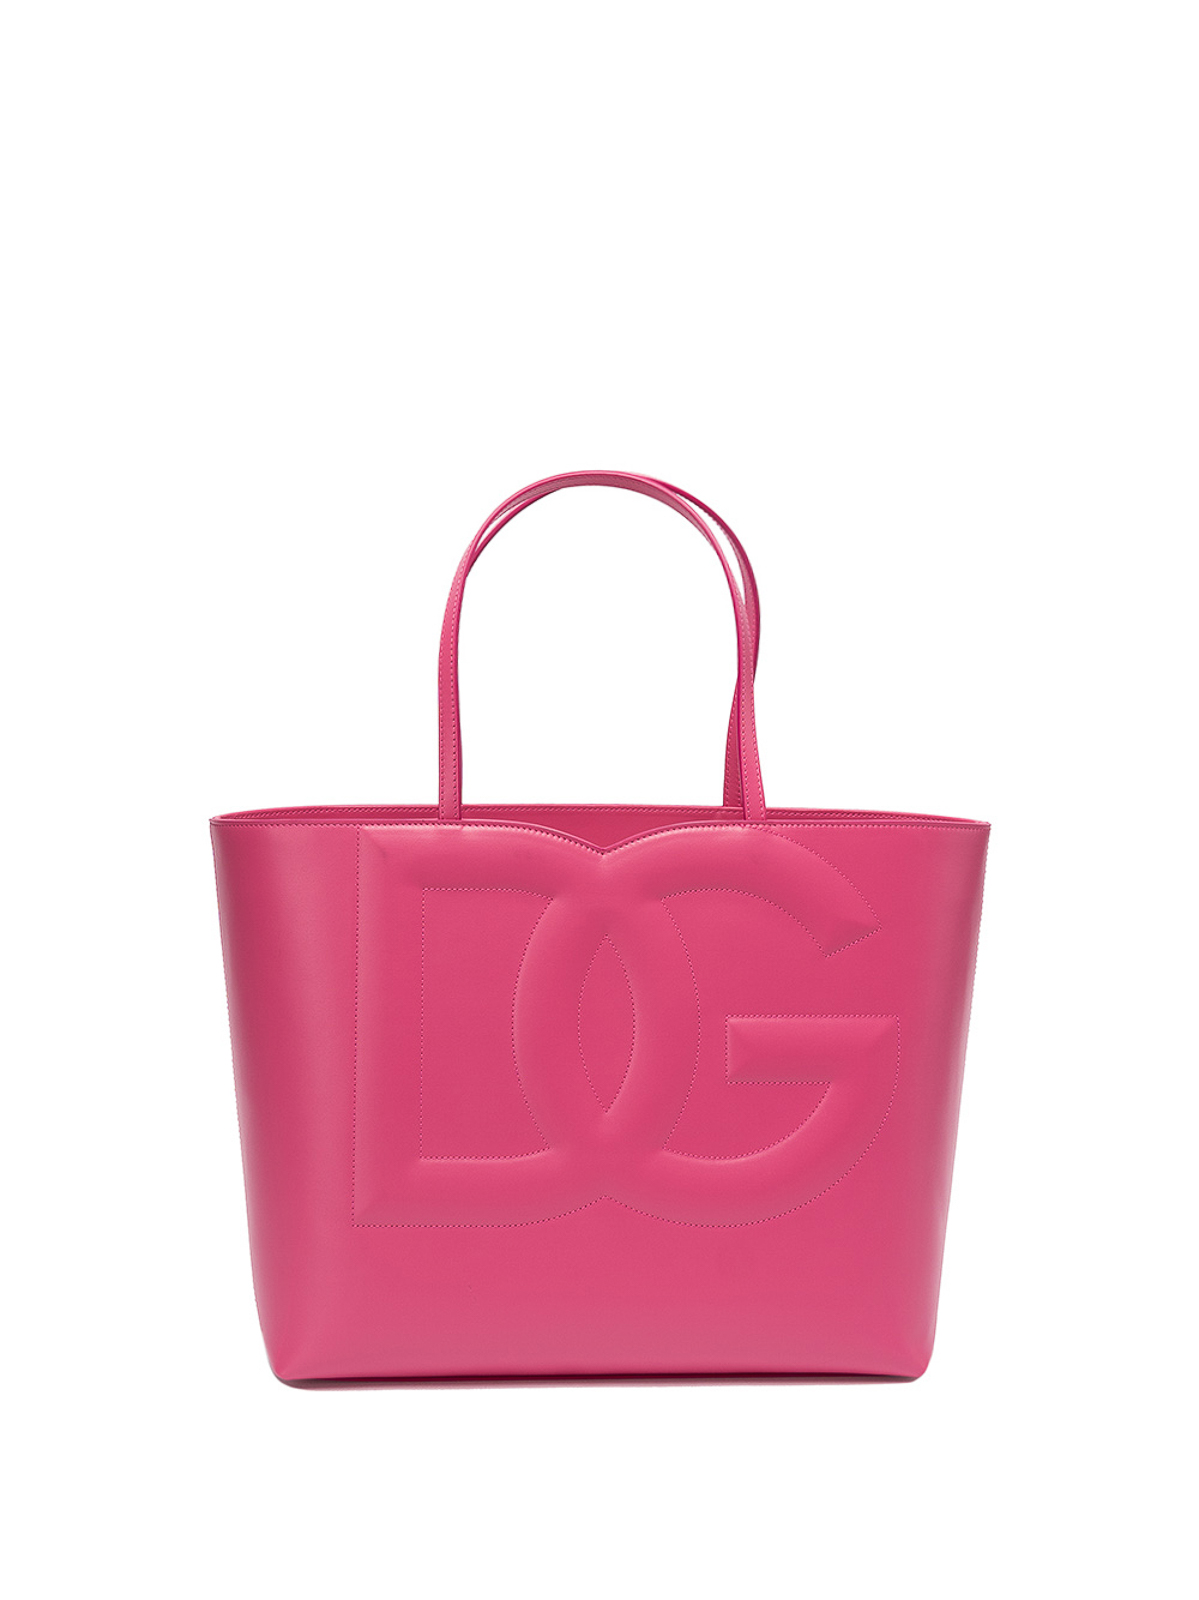 Dolce & Gabbana DG Logo Medium Leather Tote